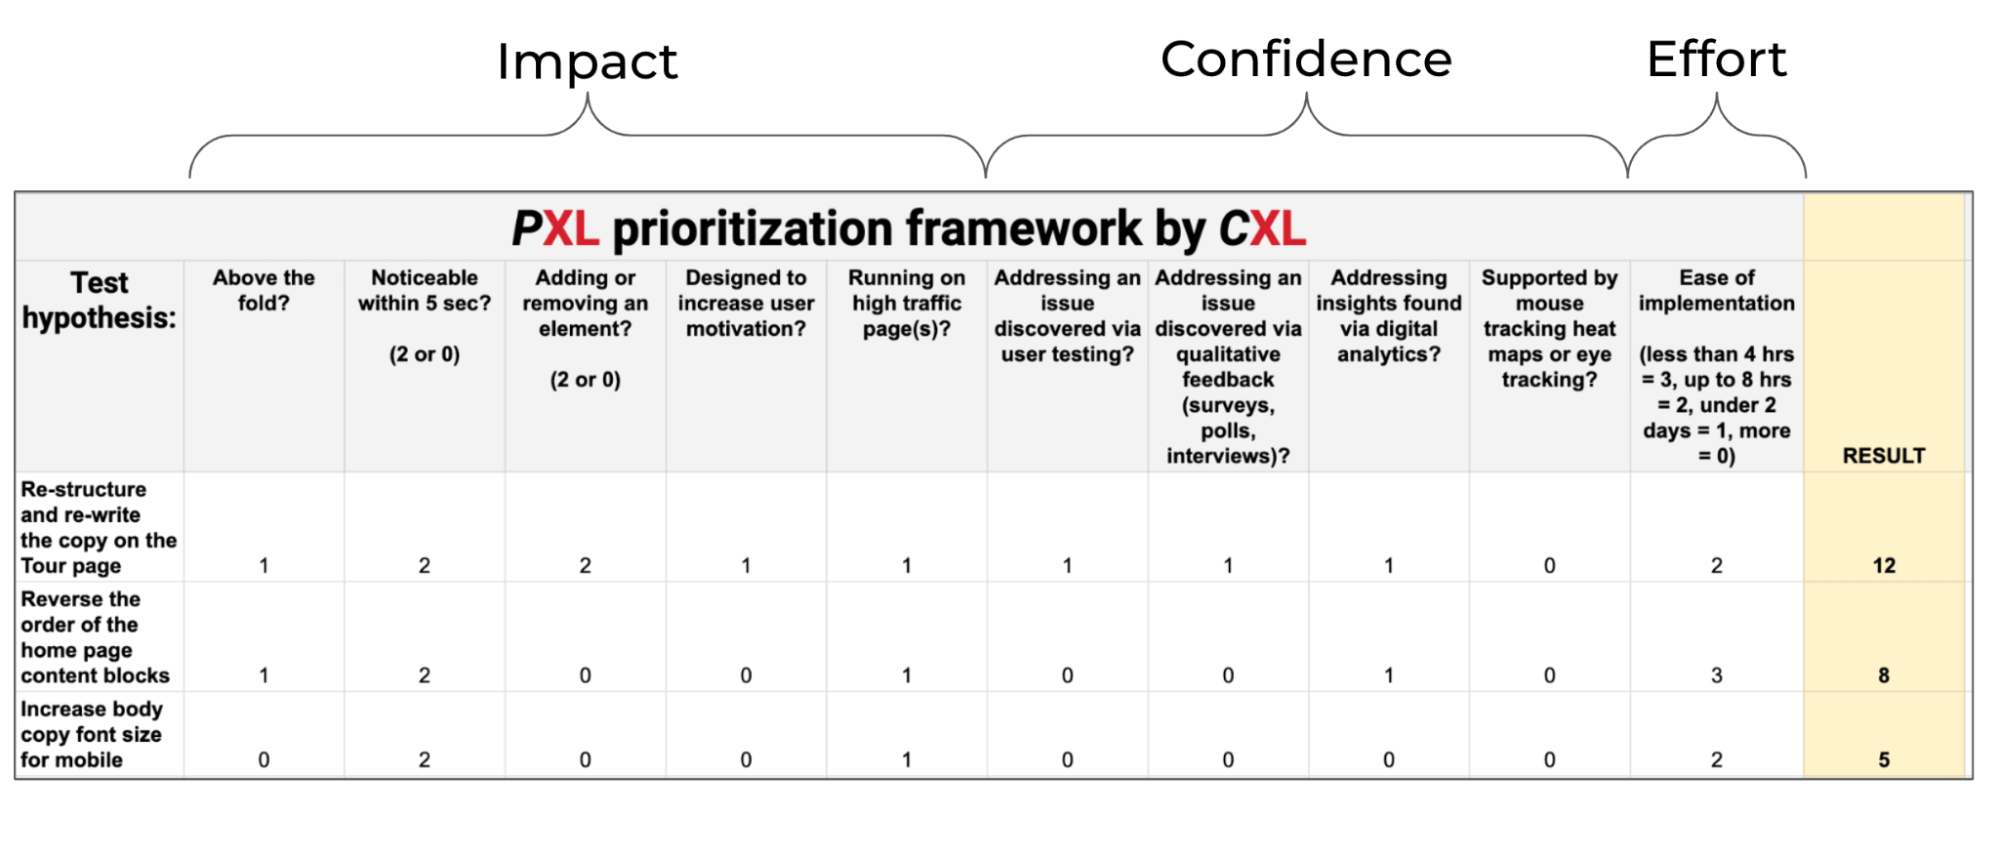 PXL A/B test prioritization Framework